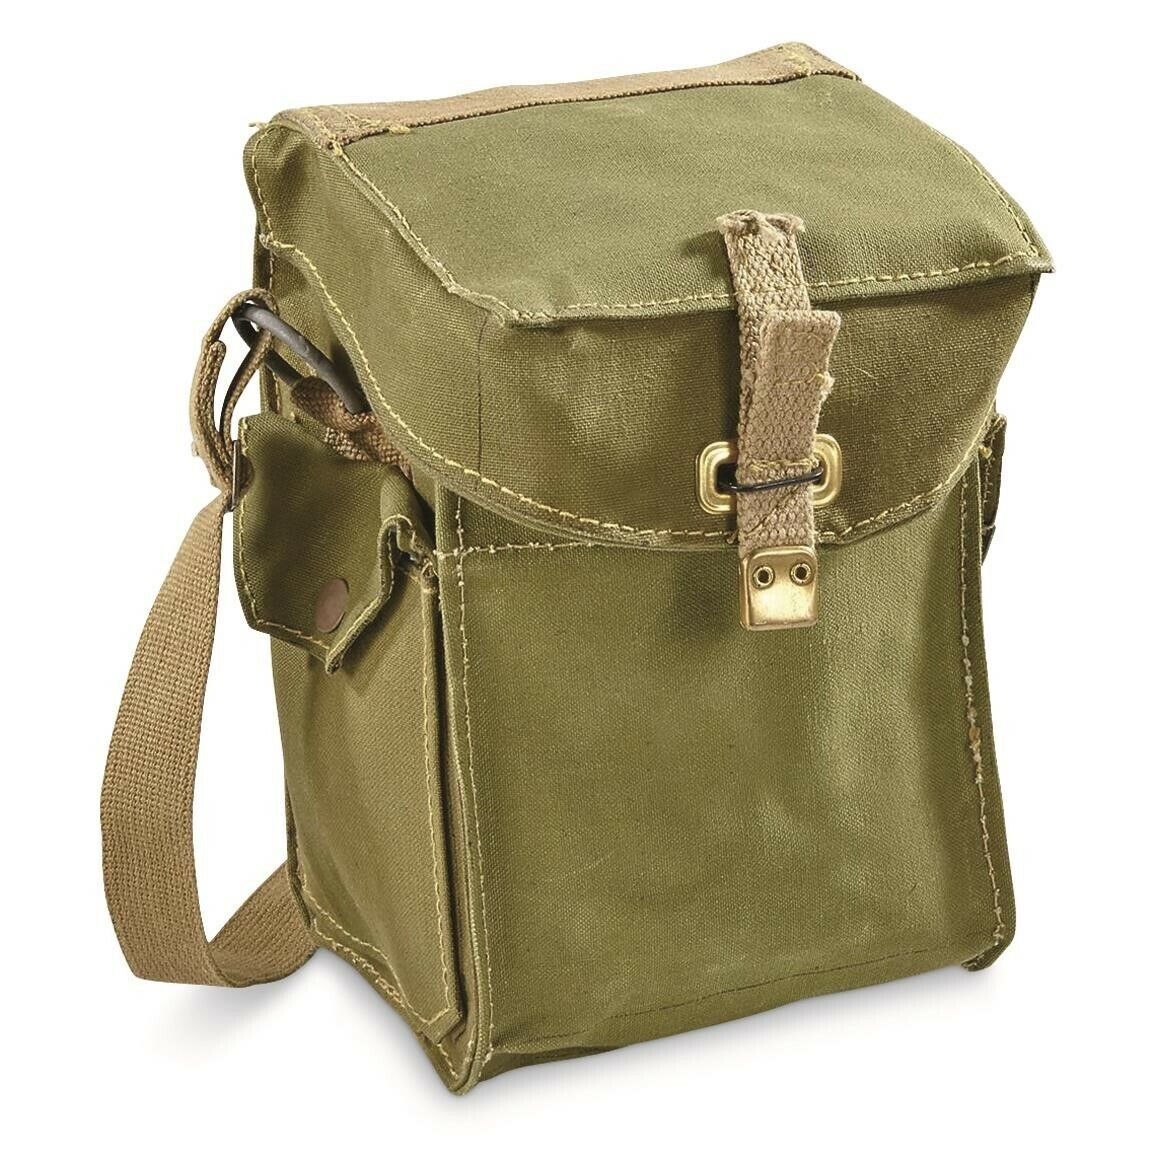 Vintage 40's WWII Era English Army Shoulder Bag 100% Cotton Brass Hardware